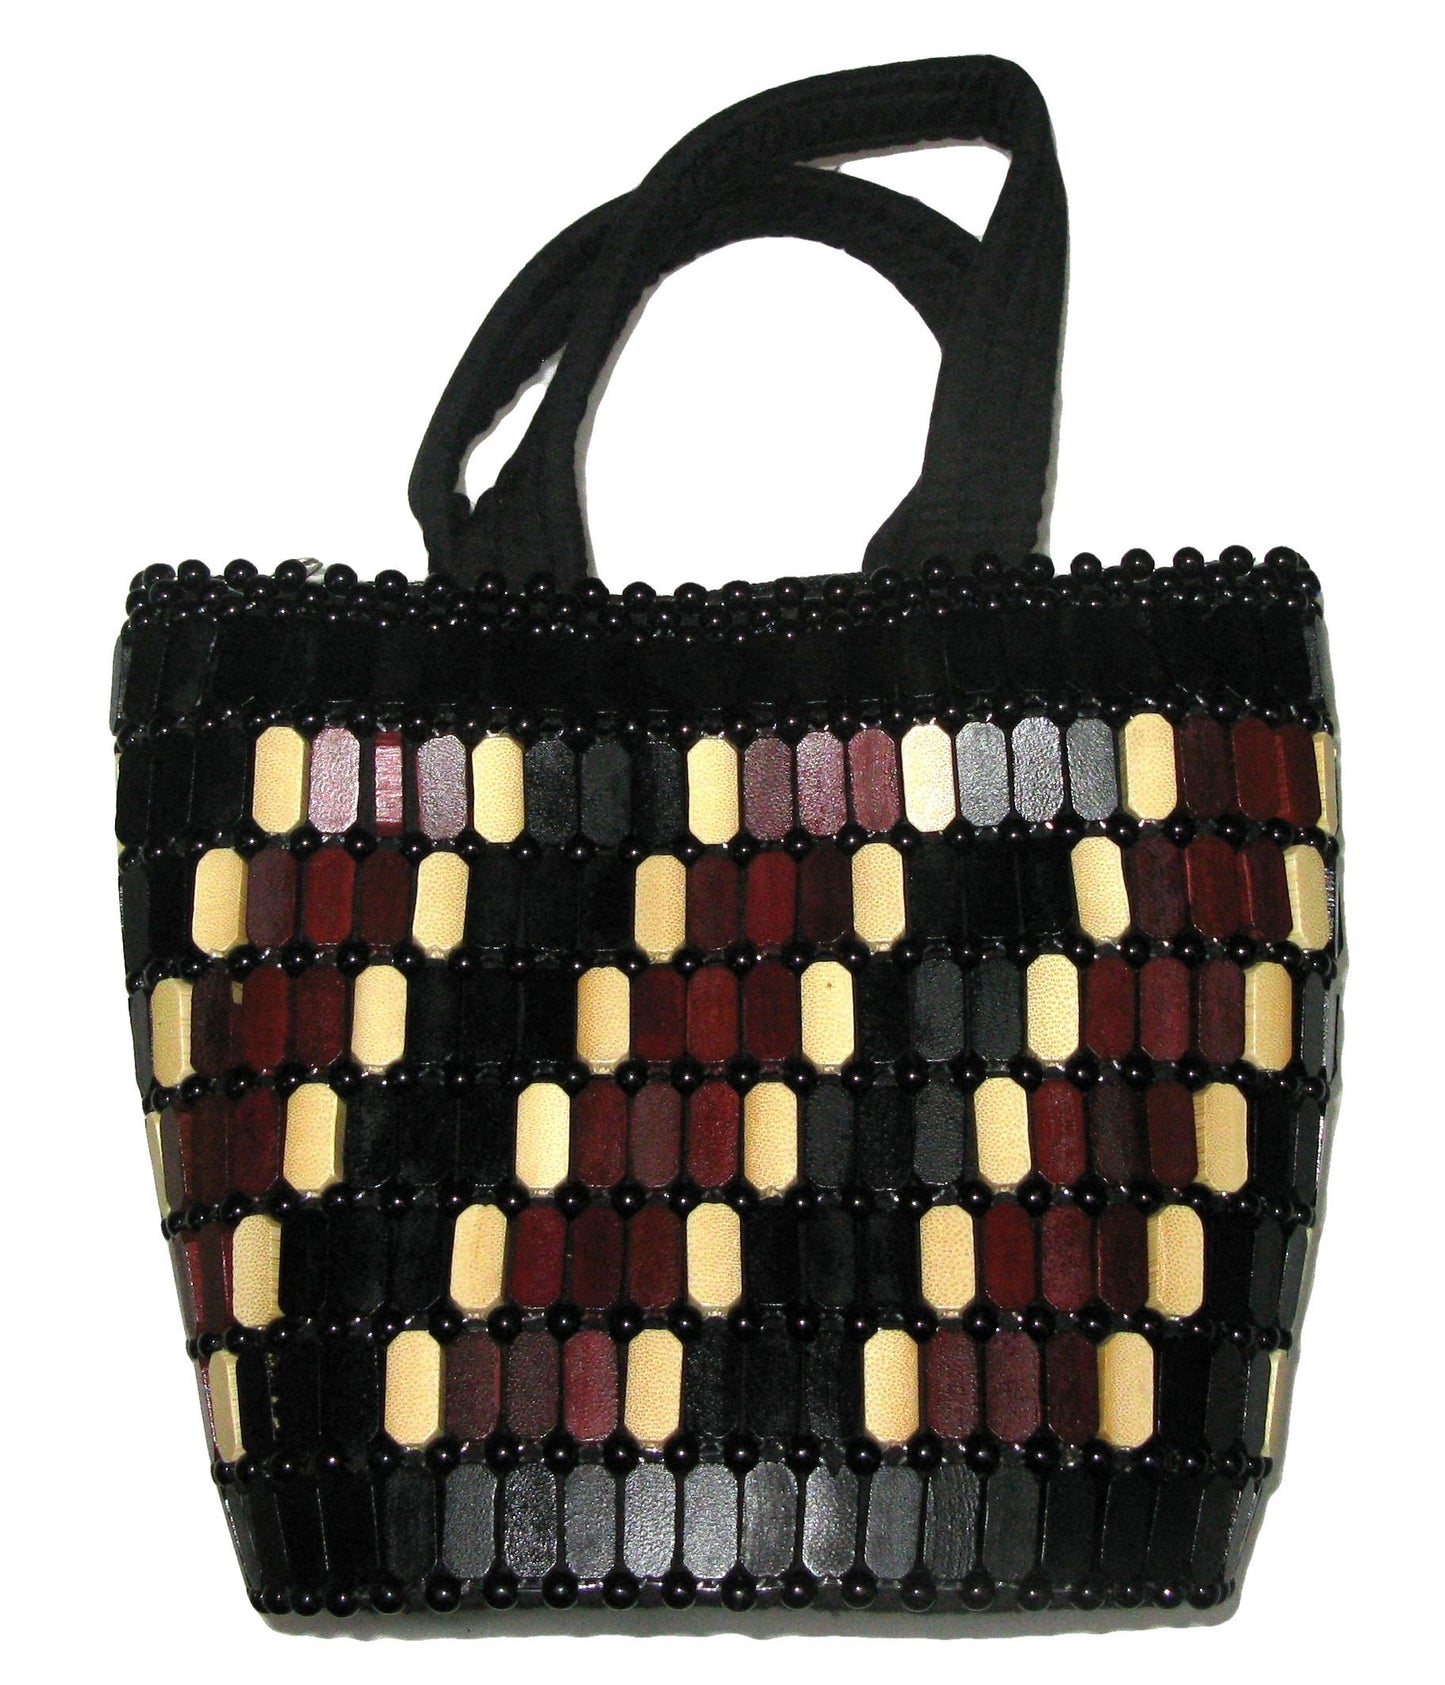 African Leather Beaded Bag - Wooden Beads, Handbag, Tote, Fashion Bag, Summer Bag Orange, Brown & Cream Design